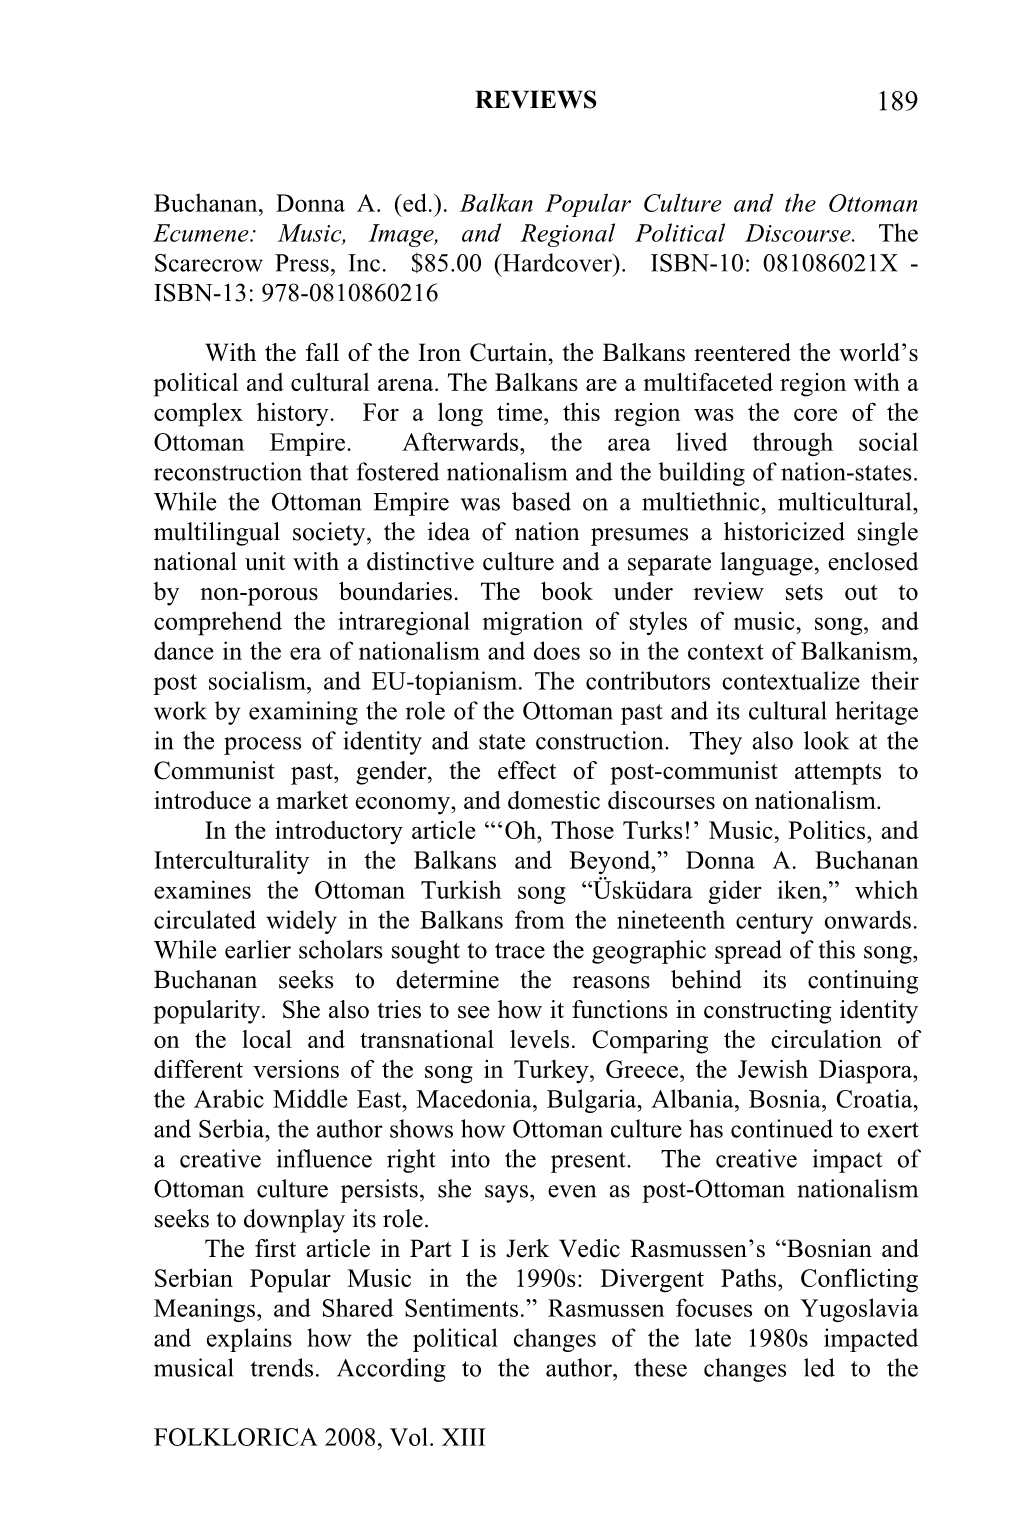 REVIEWS Buchanan, Donna A. (Ed.). Balkan Popular Culture and the Ottoman Ecumene: Music, Image, and Regional Political Discourse